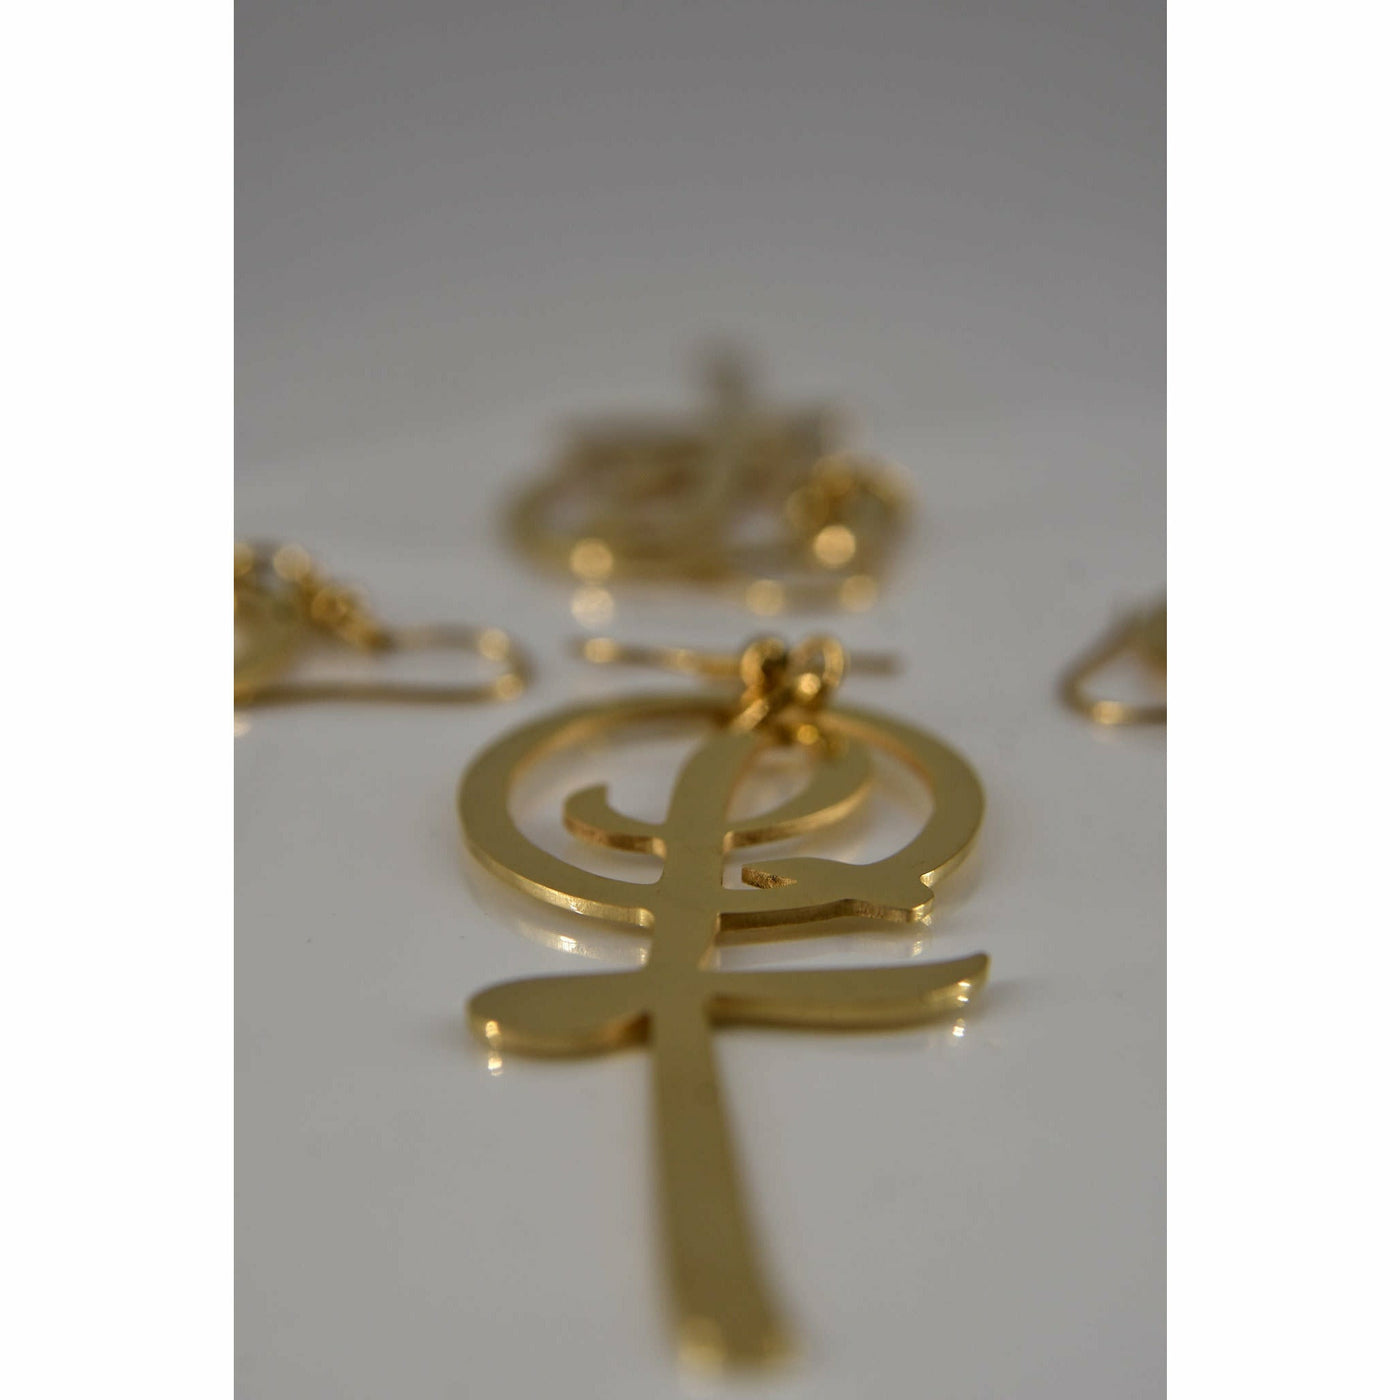 QLT 18 KT Gold Plated Royal Awareness Medium 2.5 inch Earrings